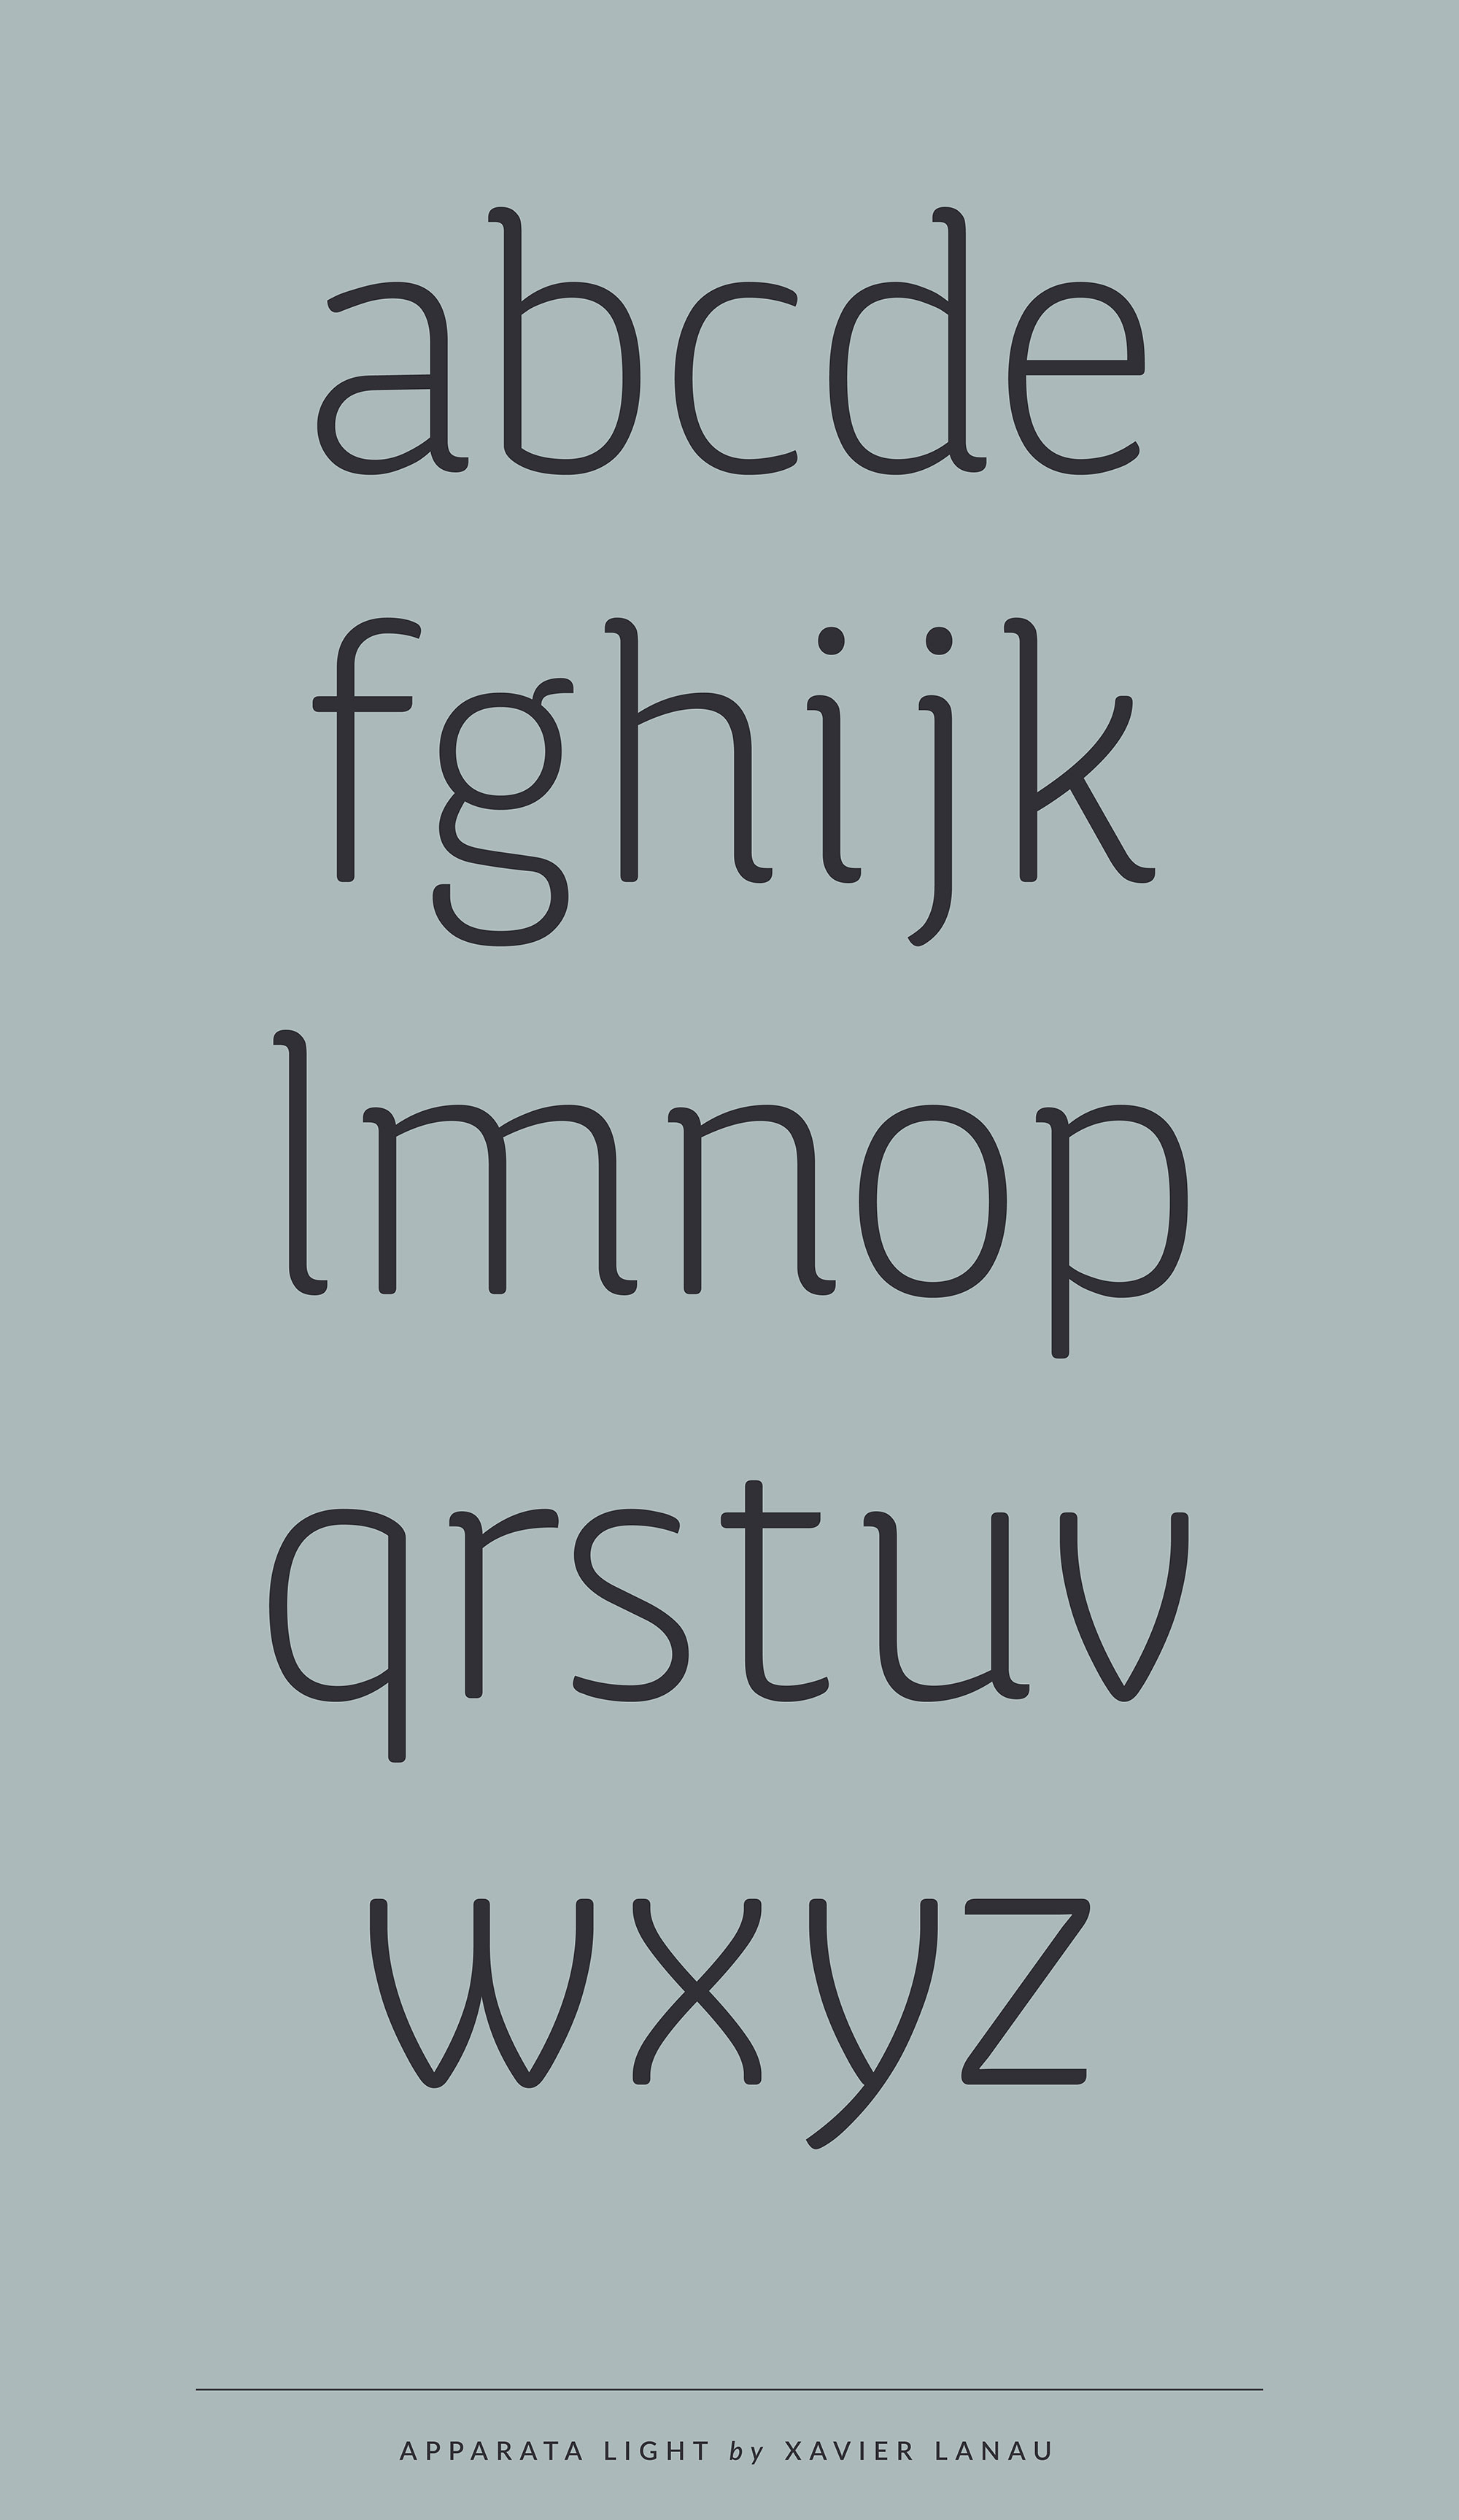 Apparata Typeface by Xavier Lanau